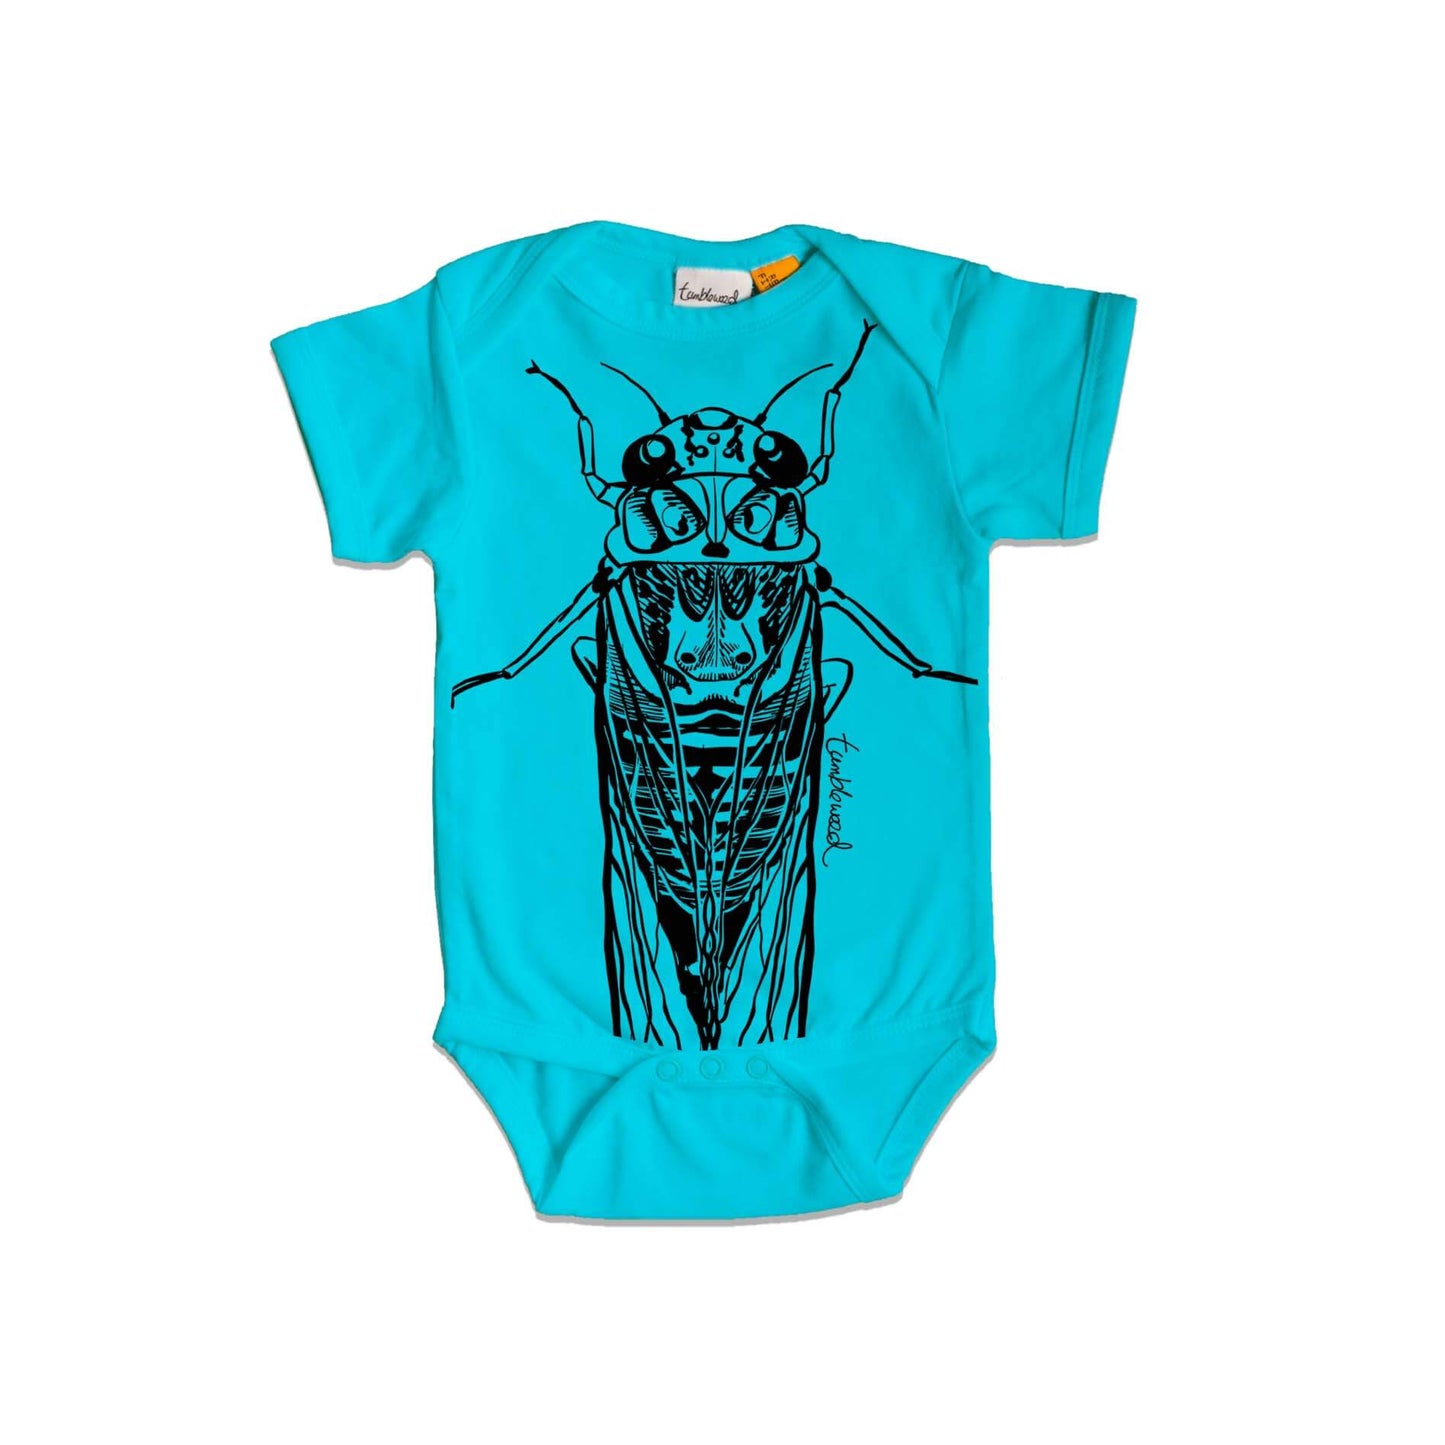 Short sleeved, blue, organic cotton, baby onesie featuring a screen printed Cicada design.
 design.